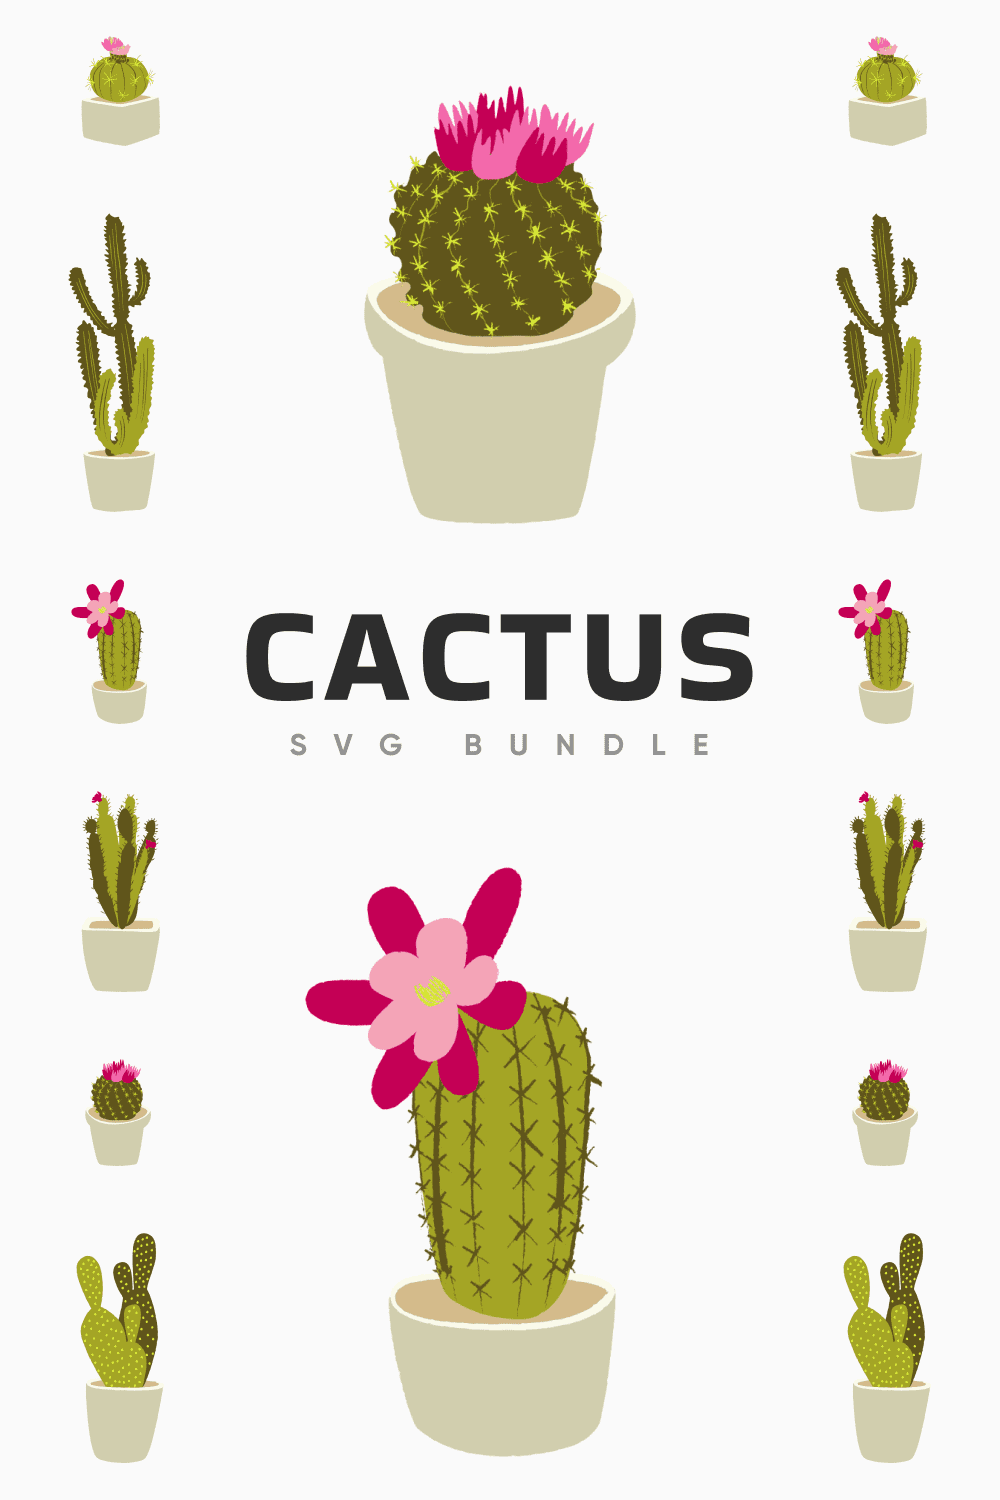 cactus svg collection pinterest image.